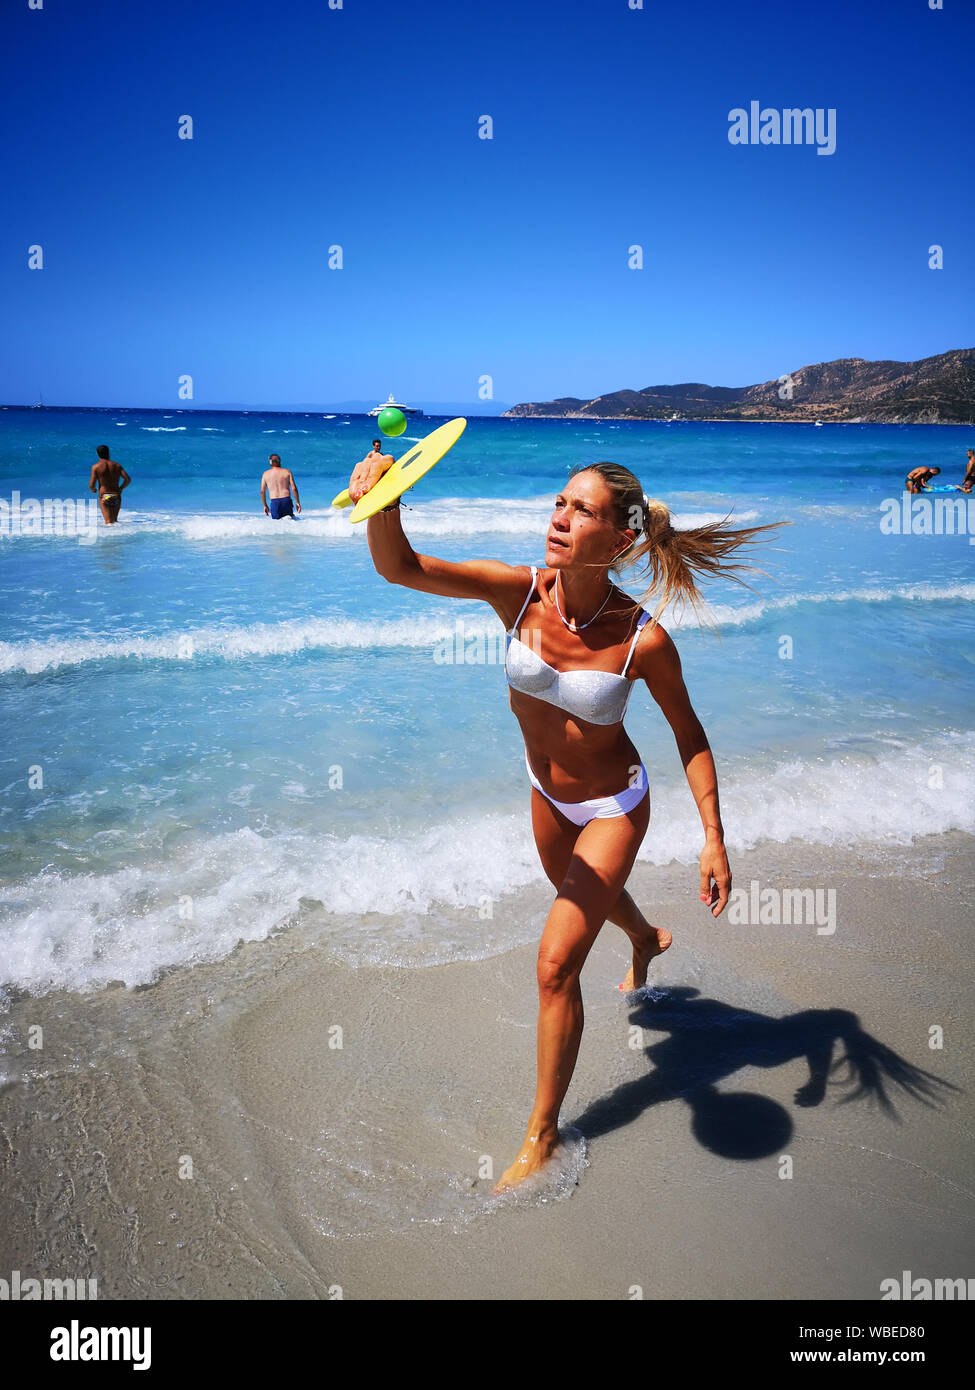 Villasimius, Italy - August 16, 2019: Woman plays beach tennis on the shore of the blue Sardinian sea. Stock Photo